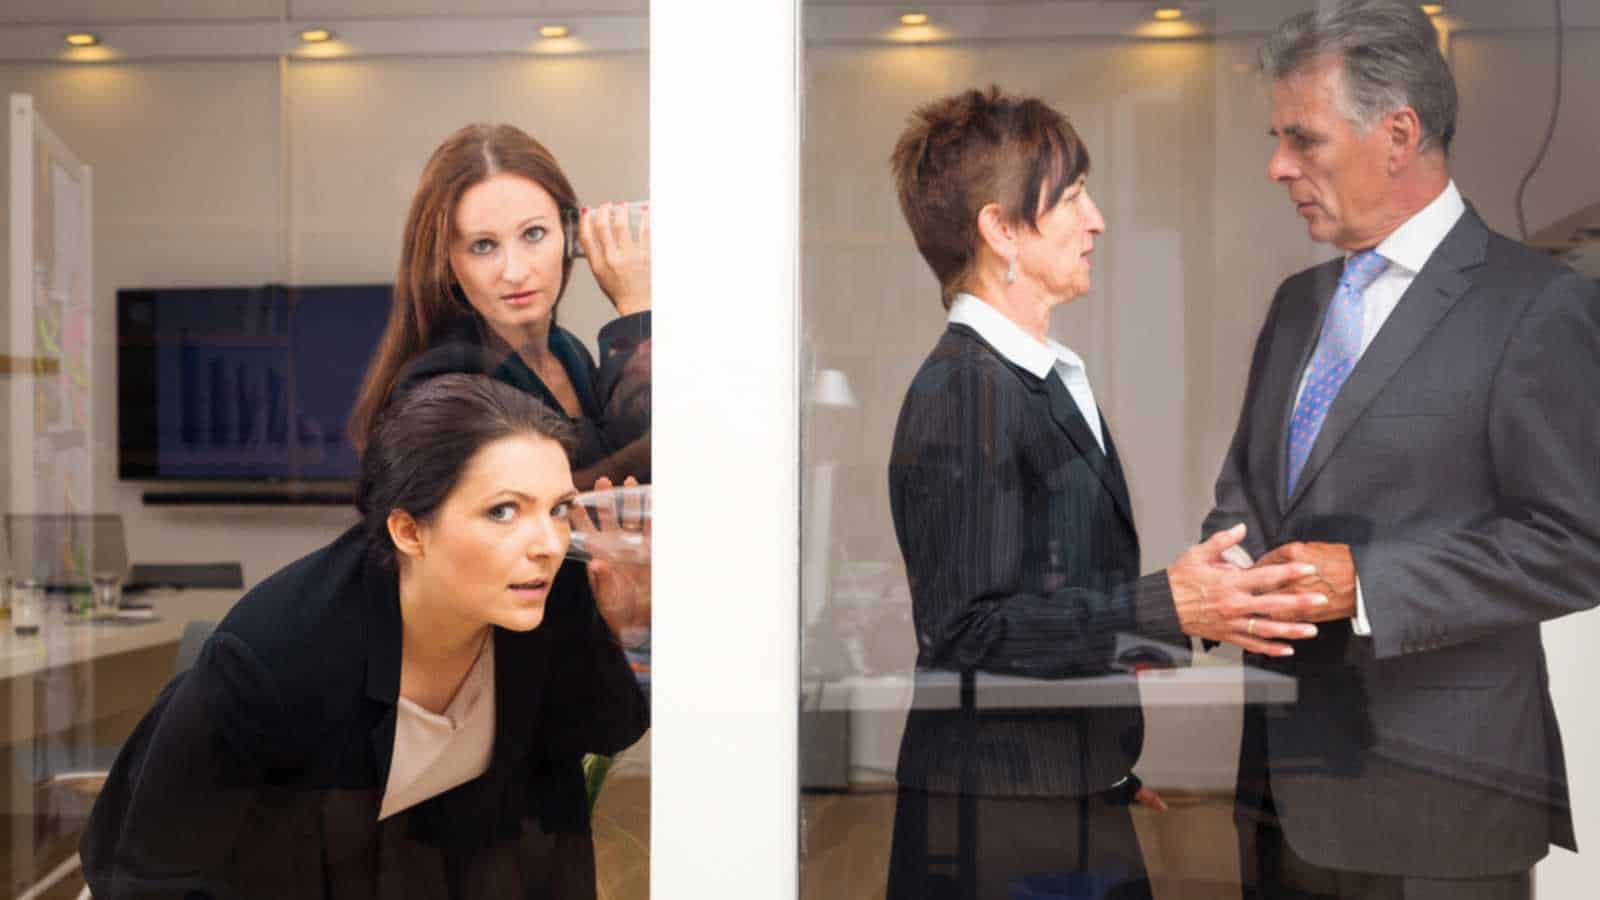 Businesswomen Eavesdropping On Their Superiors